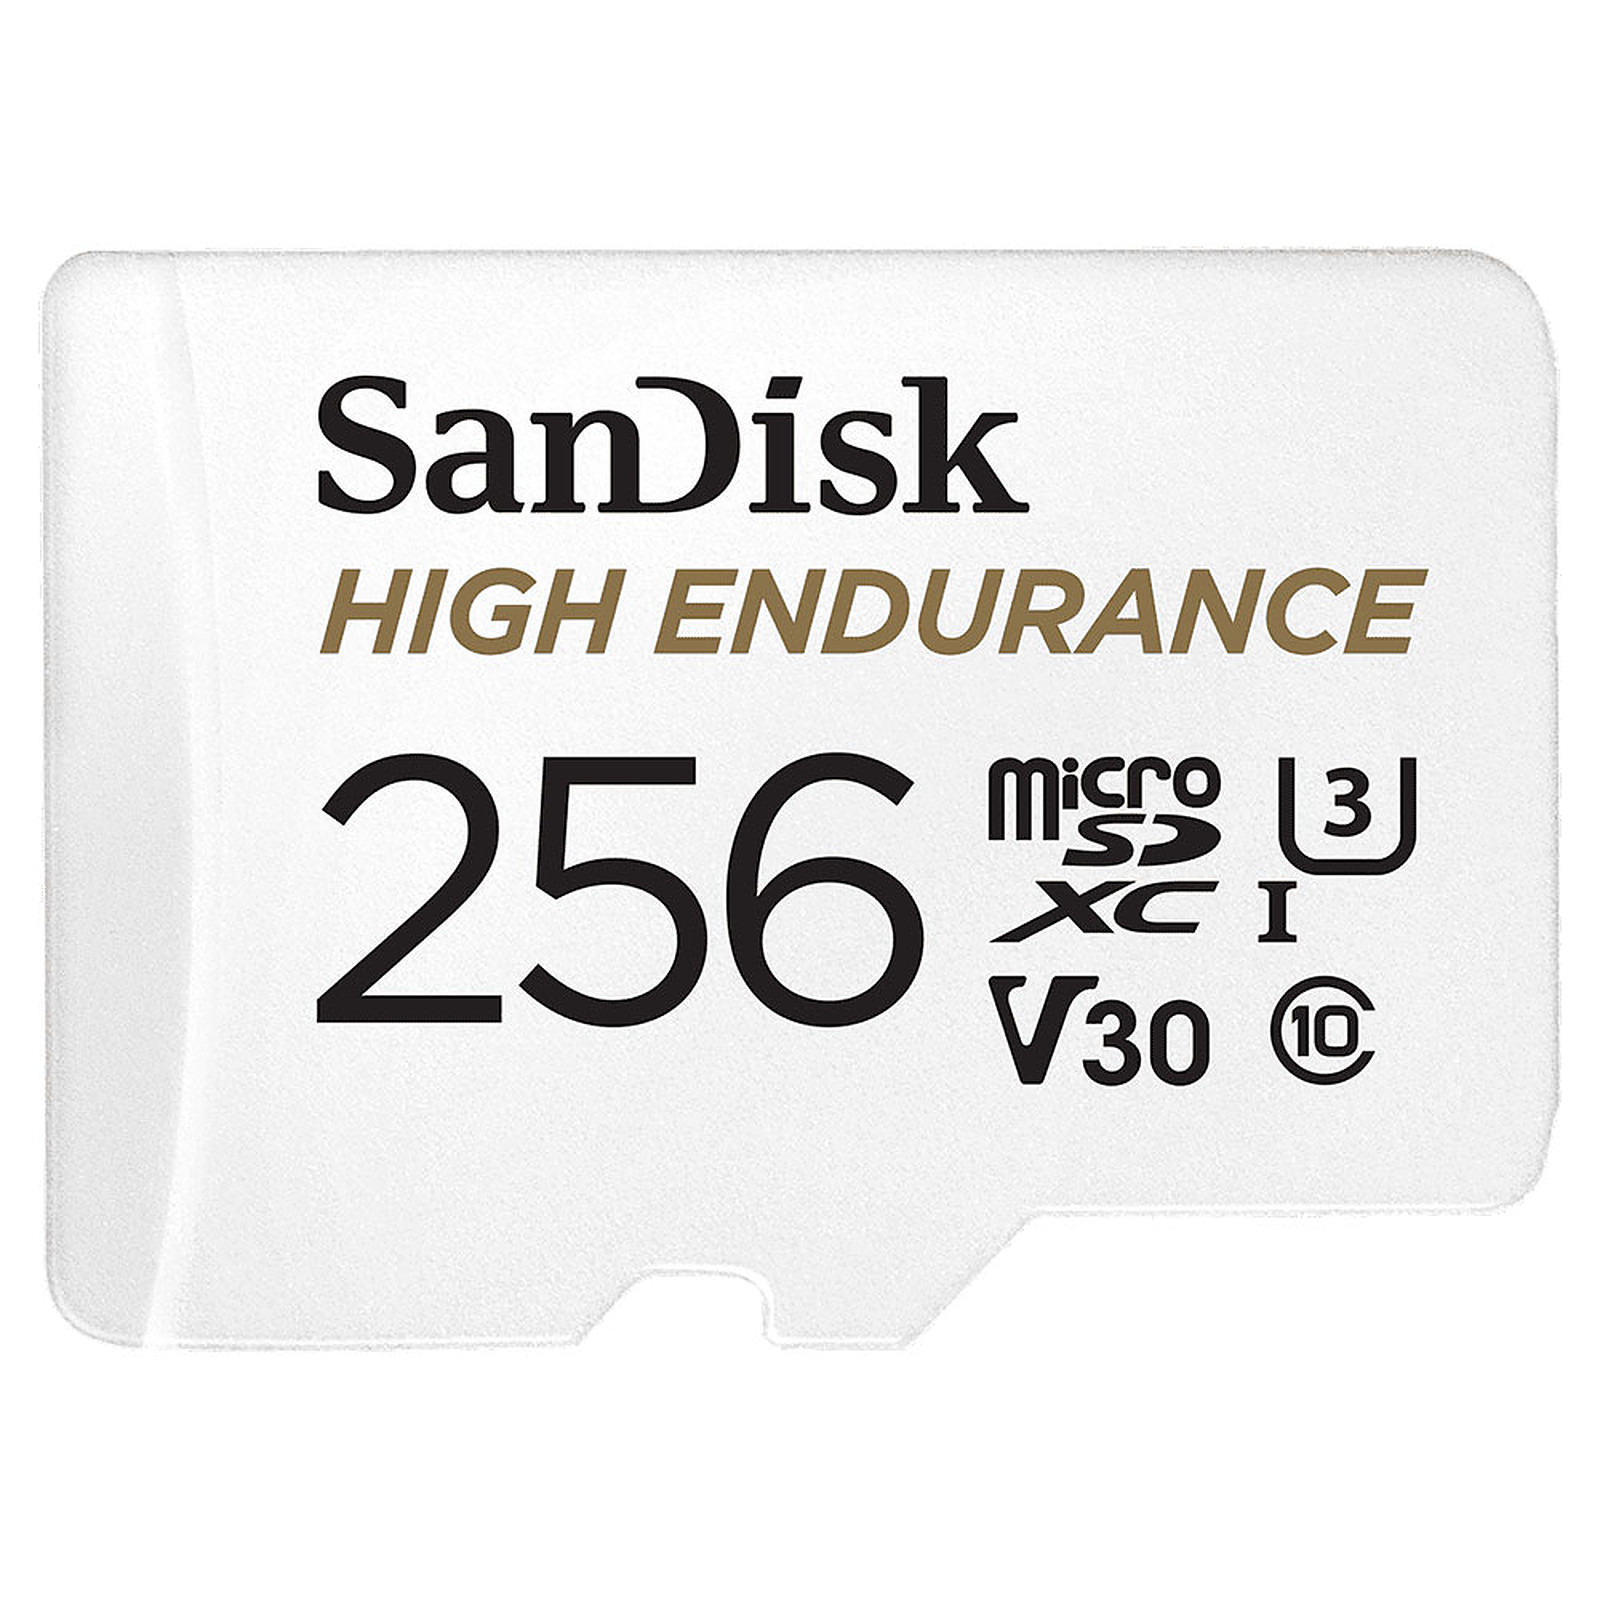 SanDisk High Endurance microSDXC UHS-I U3 V30 256 Go + Adaptateur SD - Carte memoire Sandisk